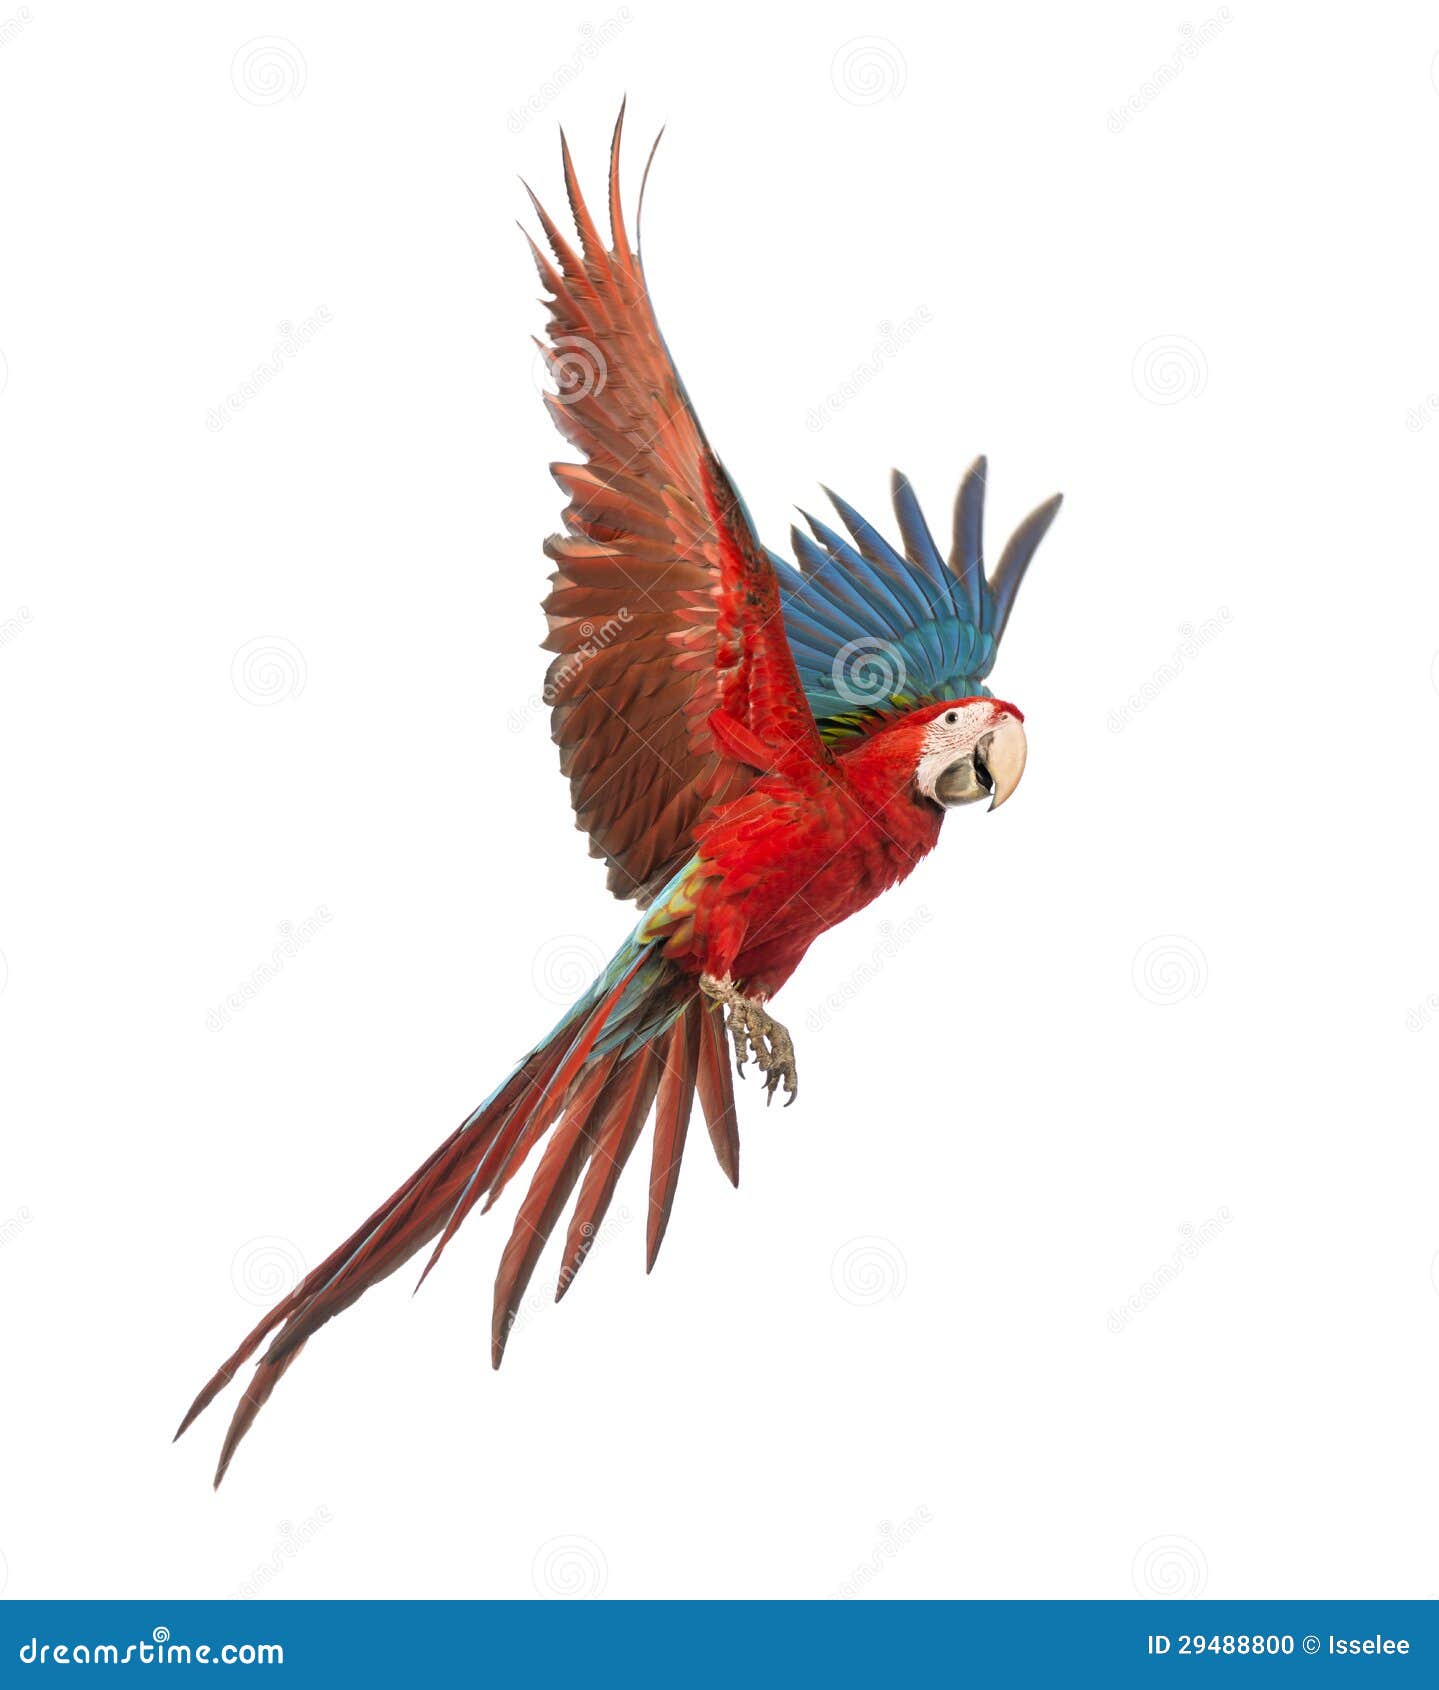 green-winged macaw, ara chloropterus, 1 year old, flying